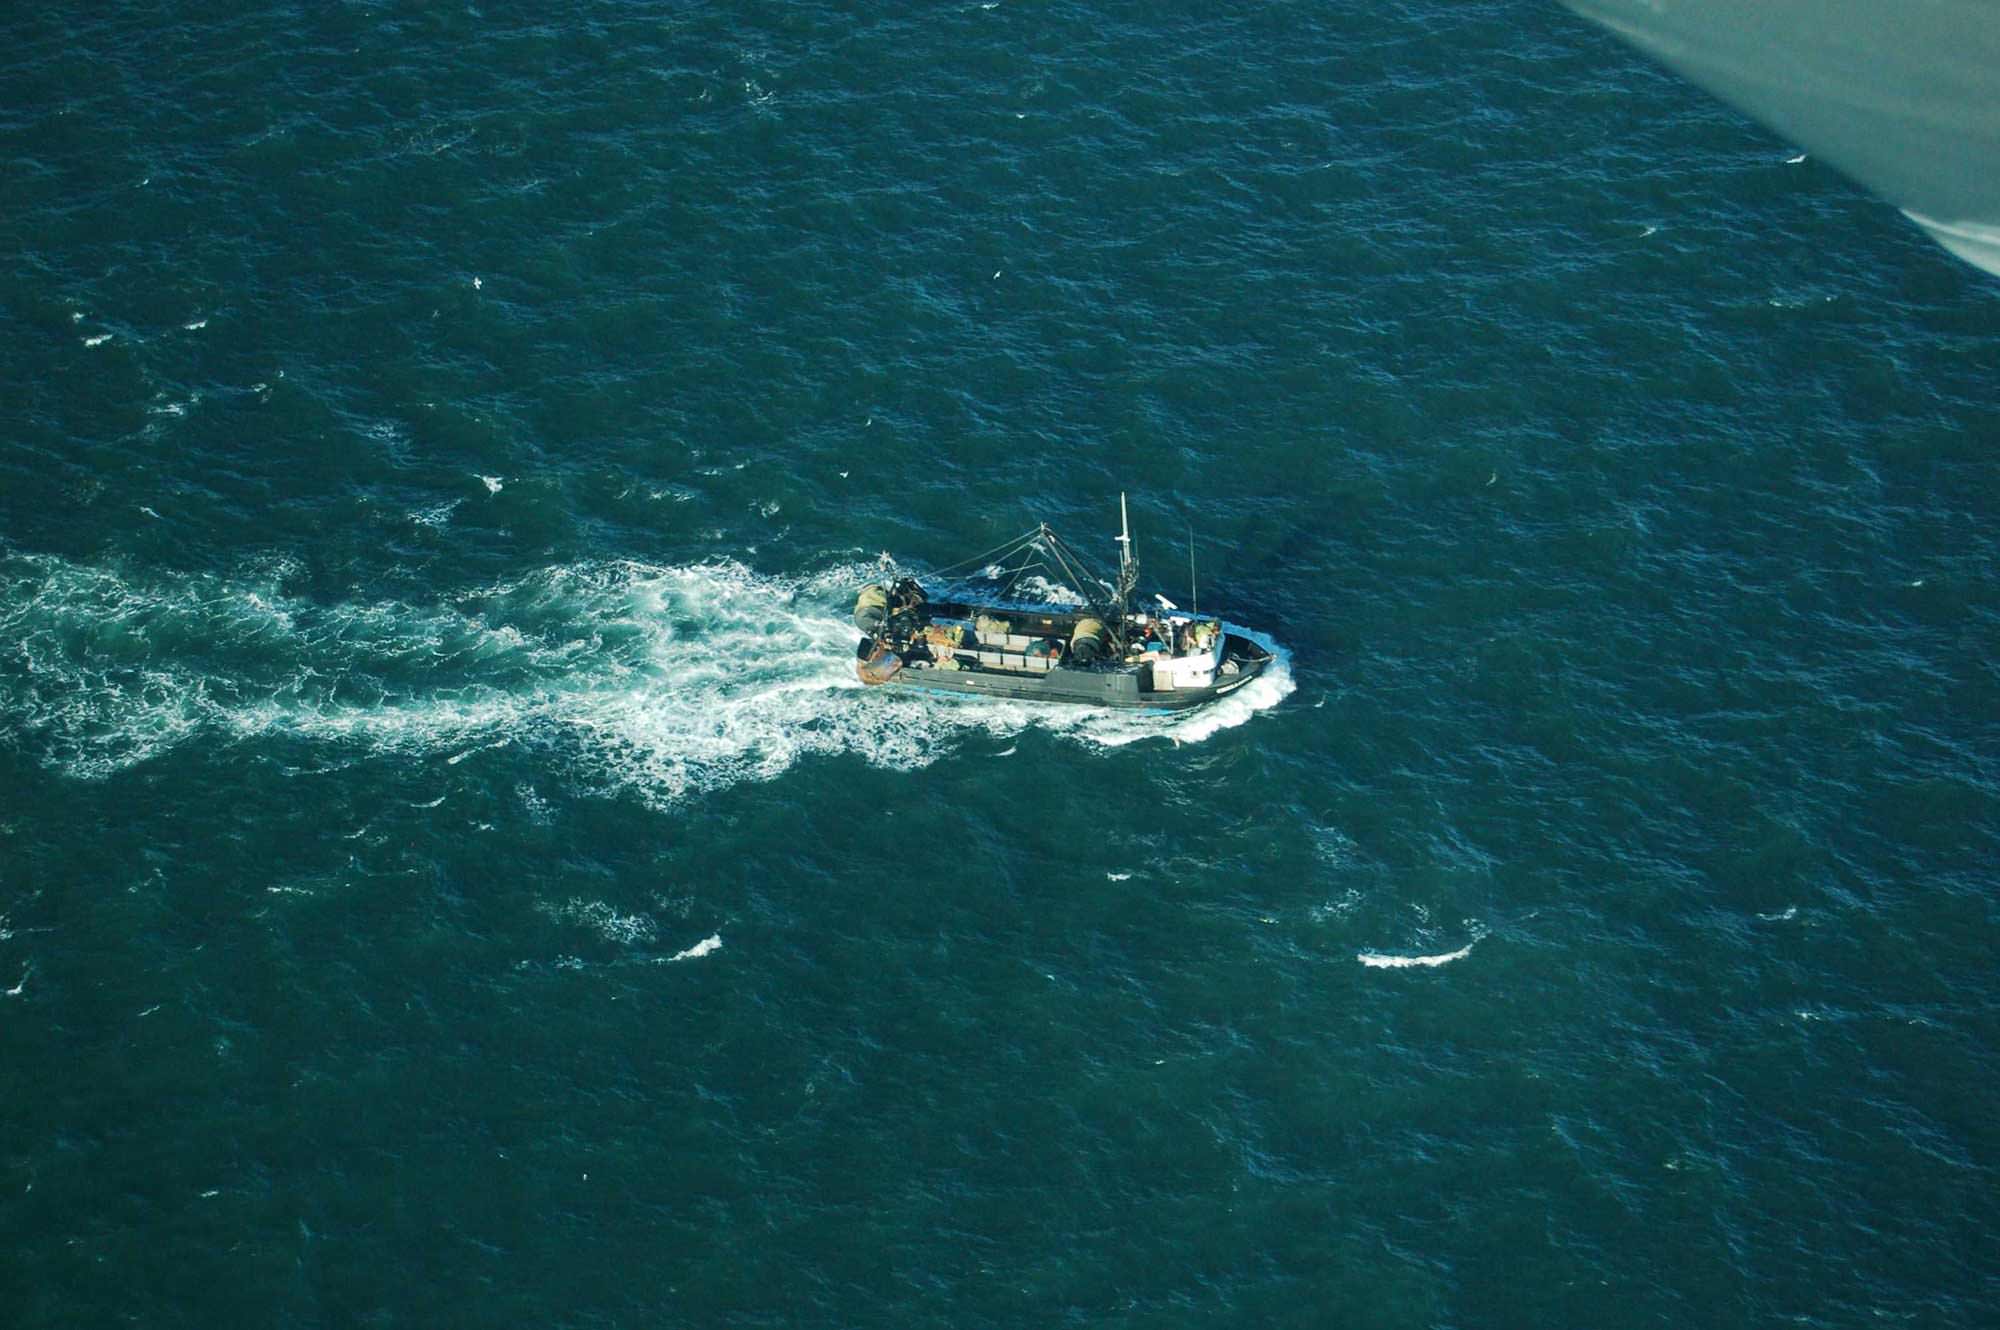 Coos Bay: Fishing Vessel